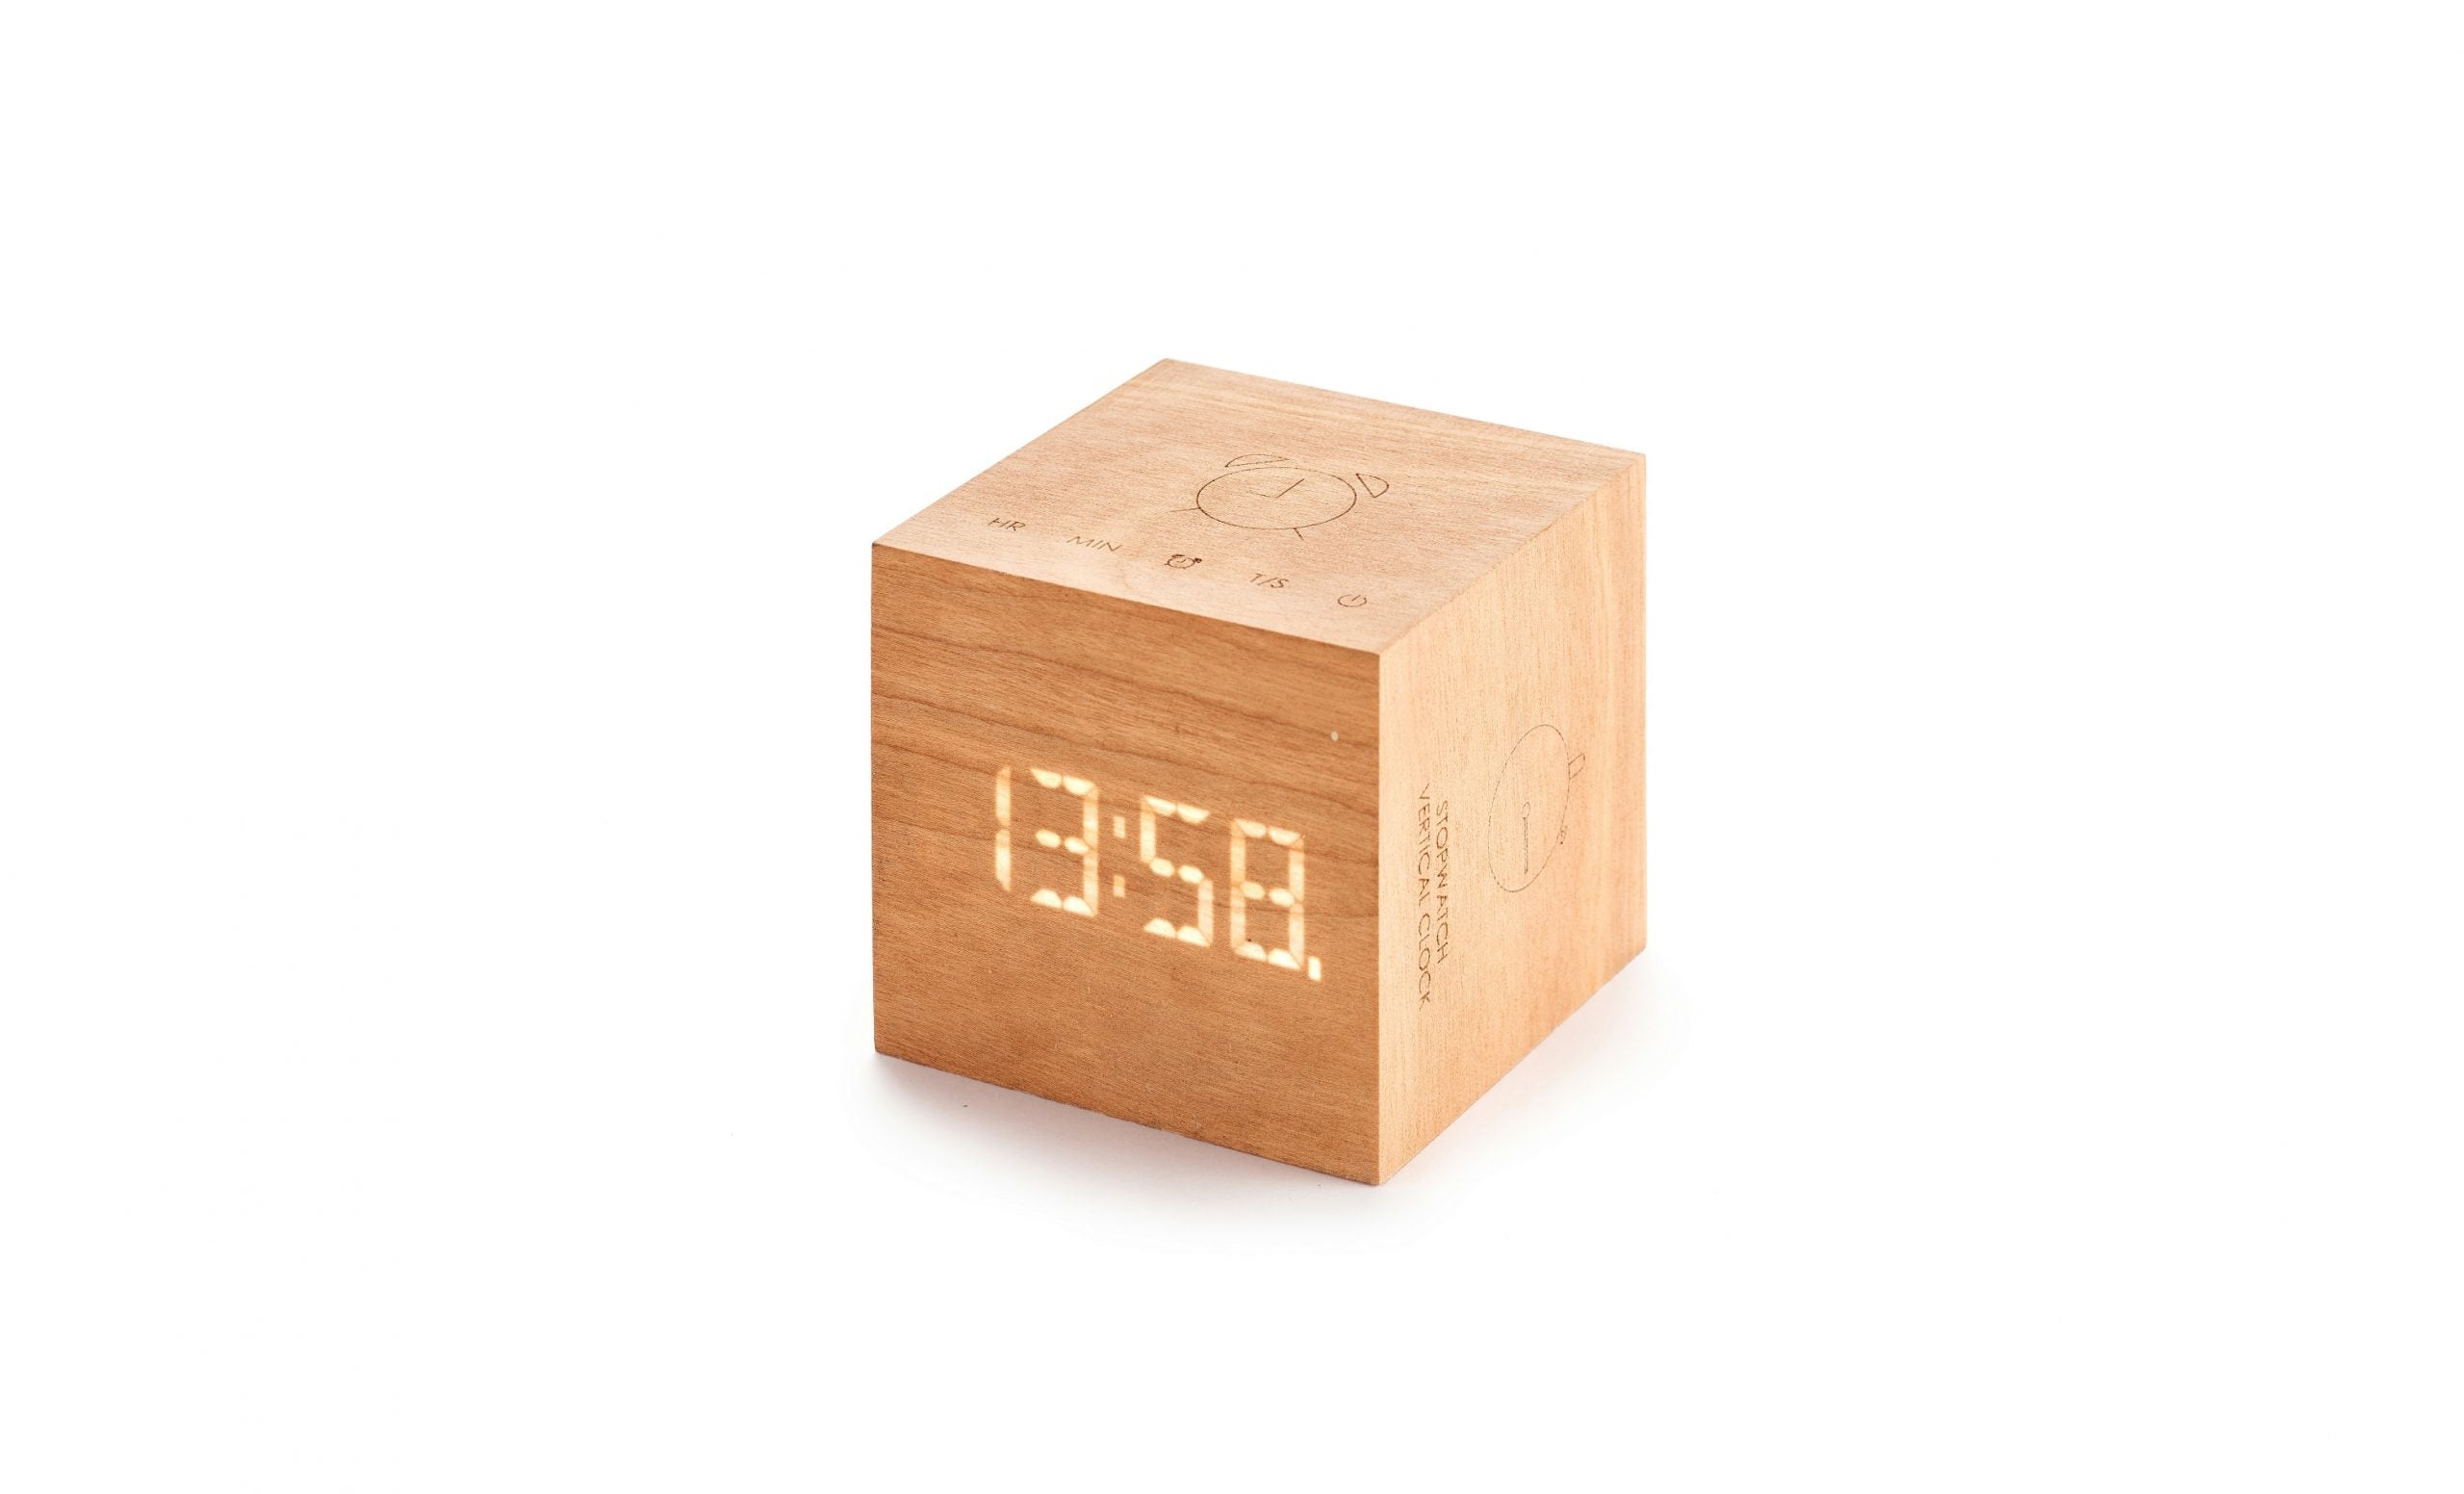 Cube horloge plus en bois de cerisier Gingko